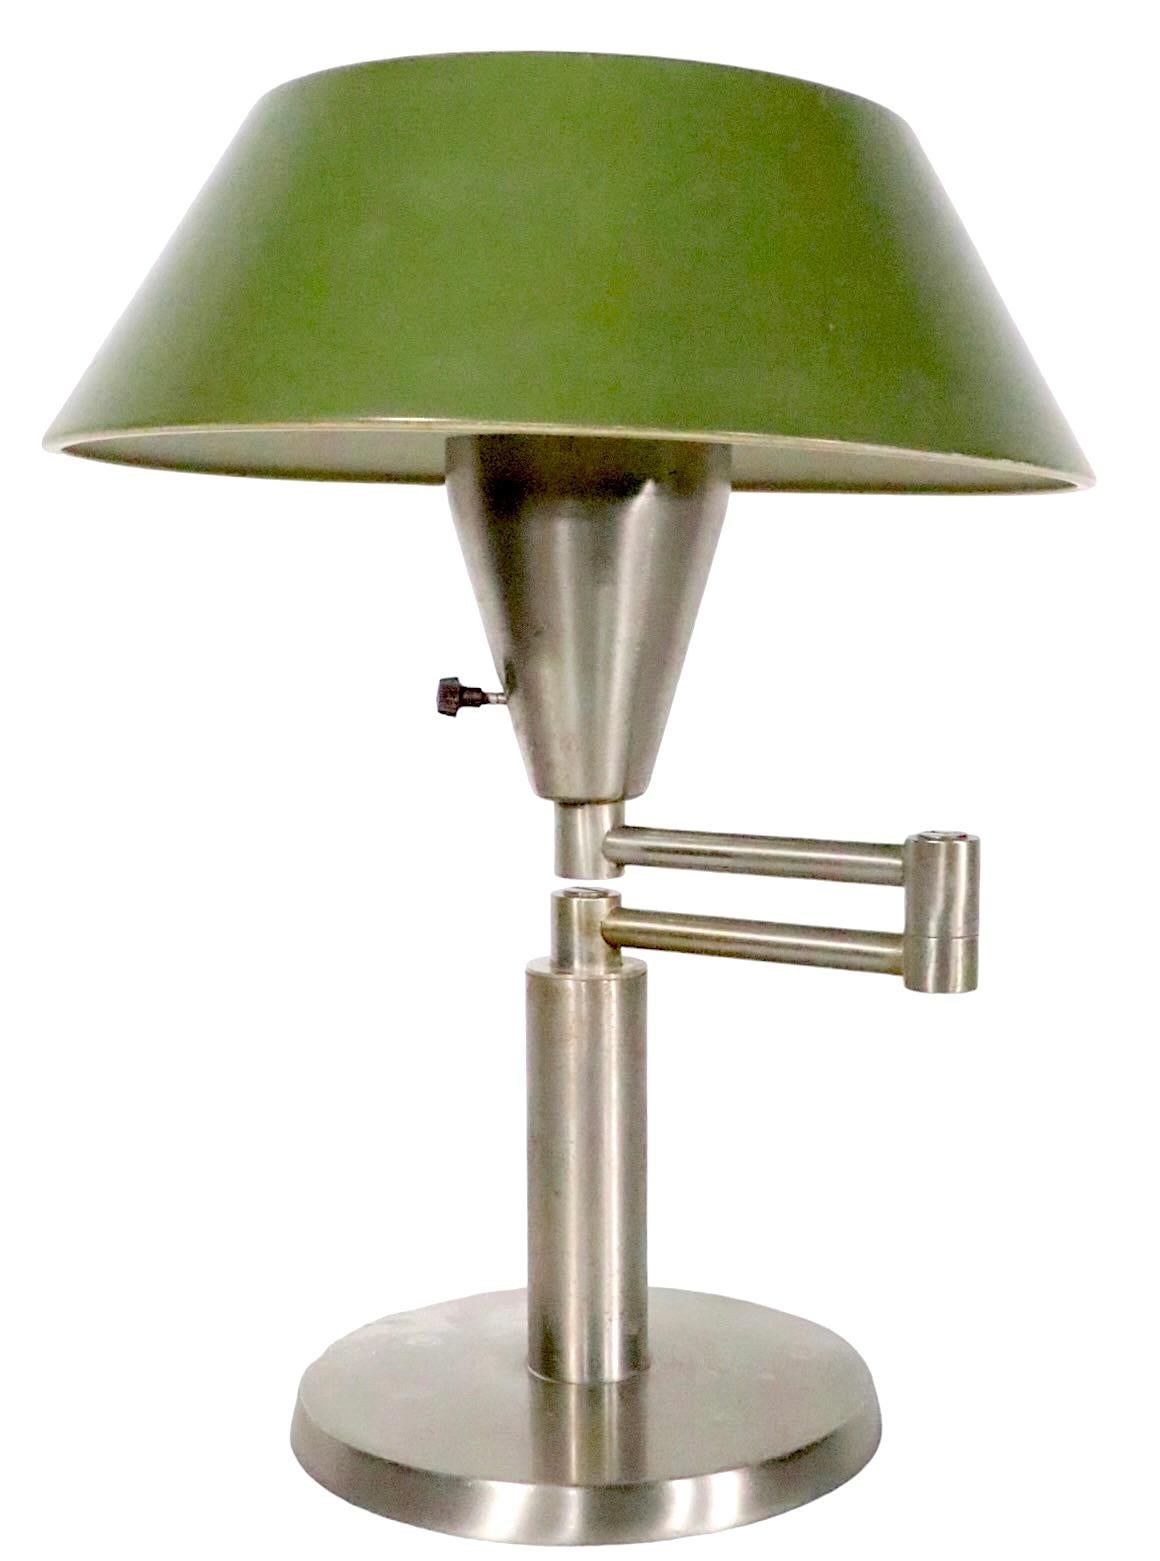 Steel Iconic Walter Von Nessen Swing Arm Desk Lamp with Original Metal Shade For Sale